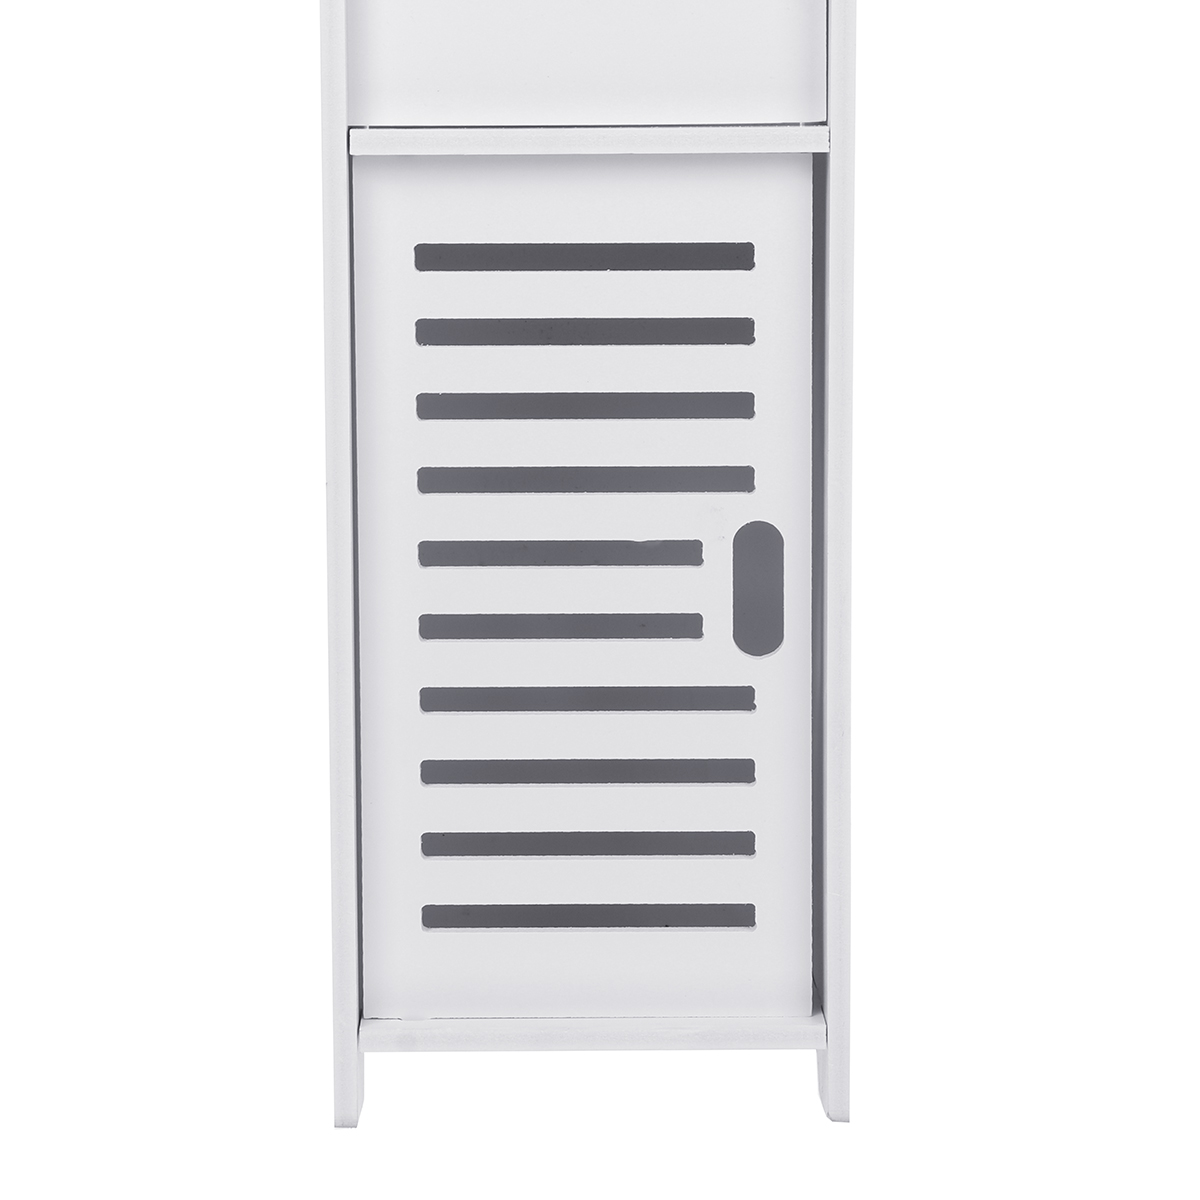 Small-Bathroom-Toilet-Storage-Cabinet-Waterproof-Organizer-Standing-Rack-Shelf-1779556-10